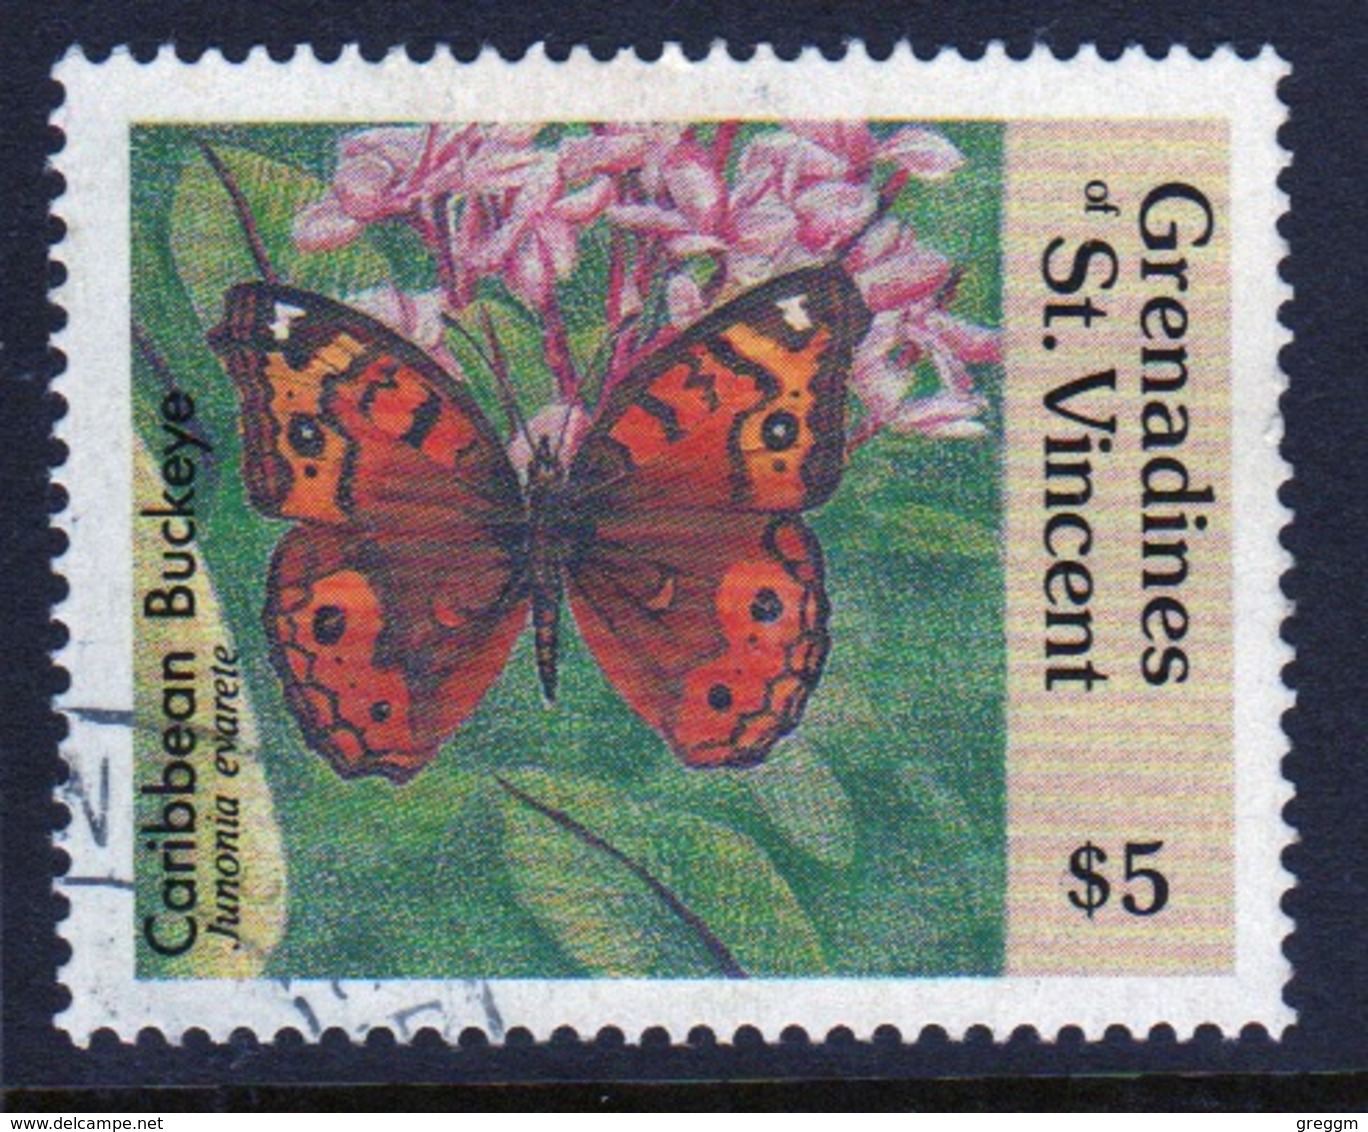 St.Vincent & Grenadines 1989 Single $5 Stamp From The Butterflies Set. - St.Vincent Und Die Grenadinen